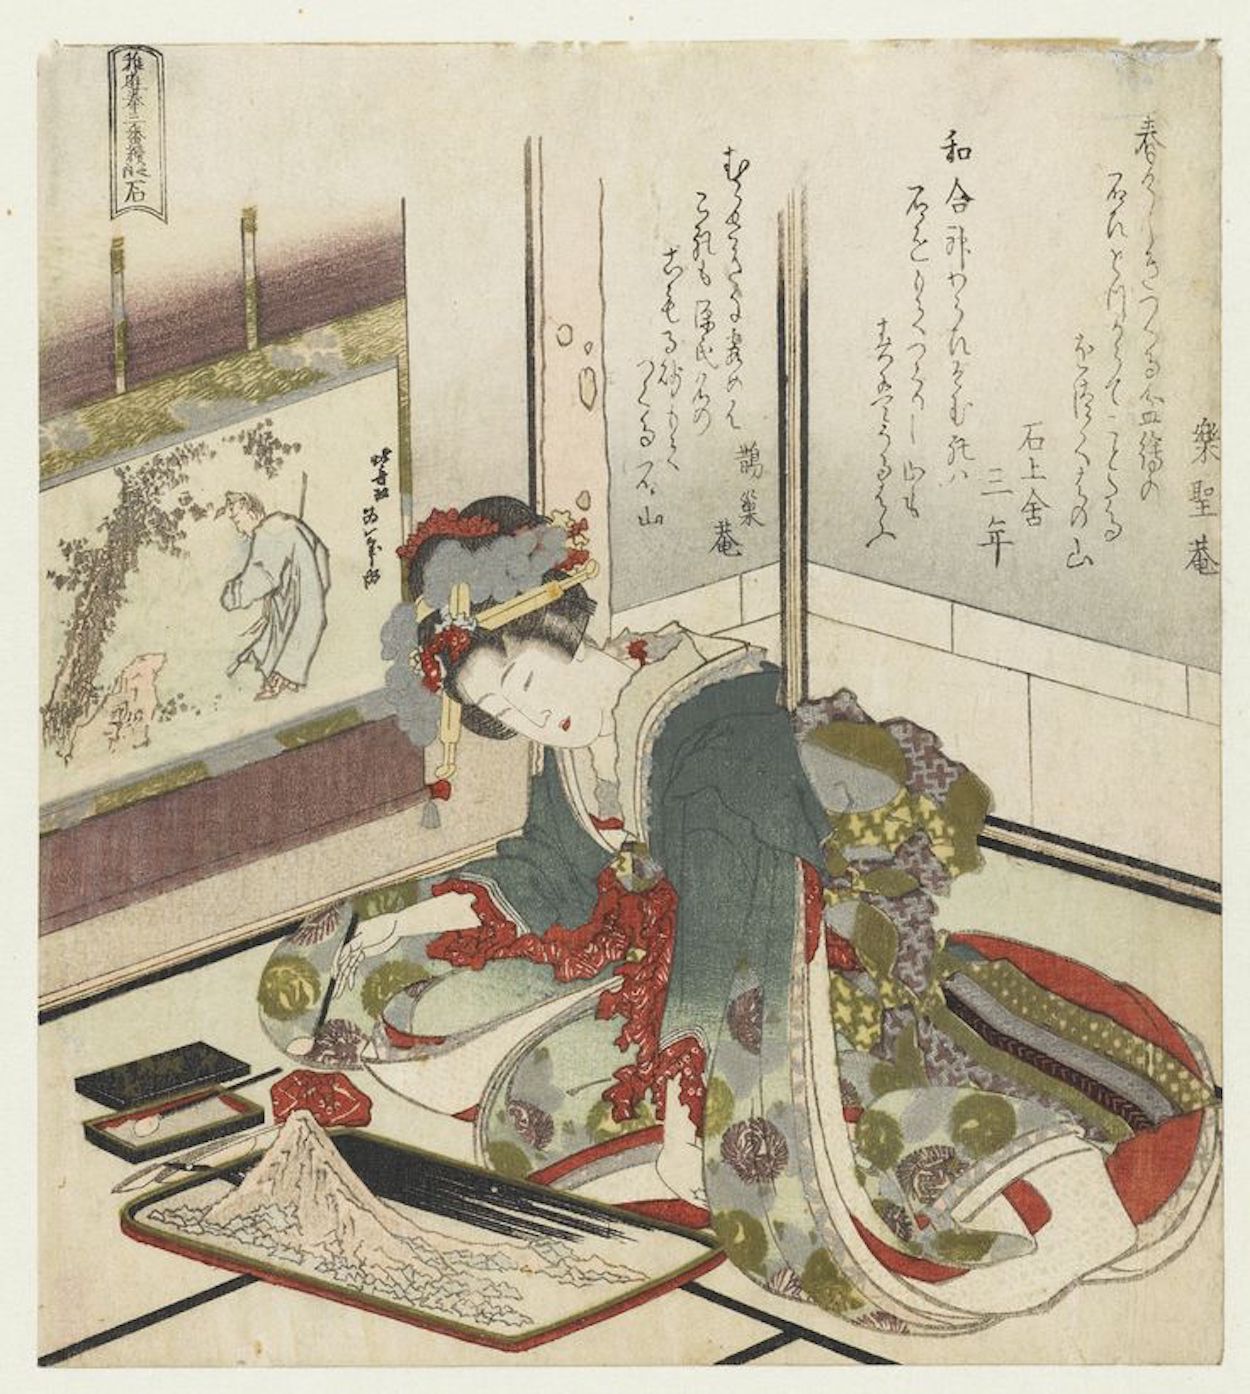 Kő by Katsushika Hokusai - 1823 